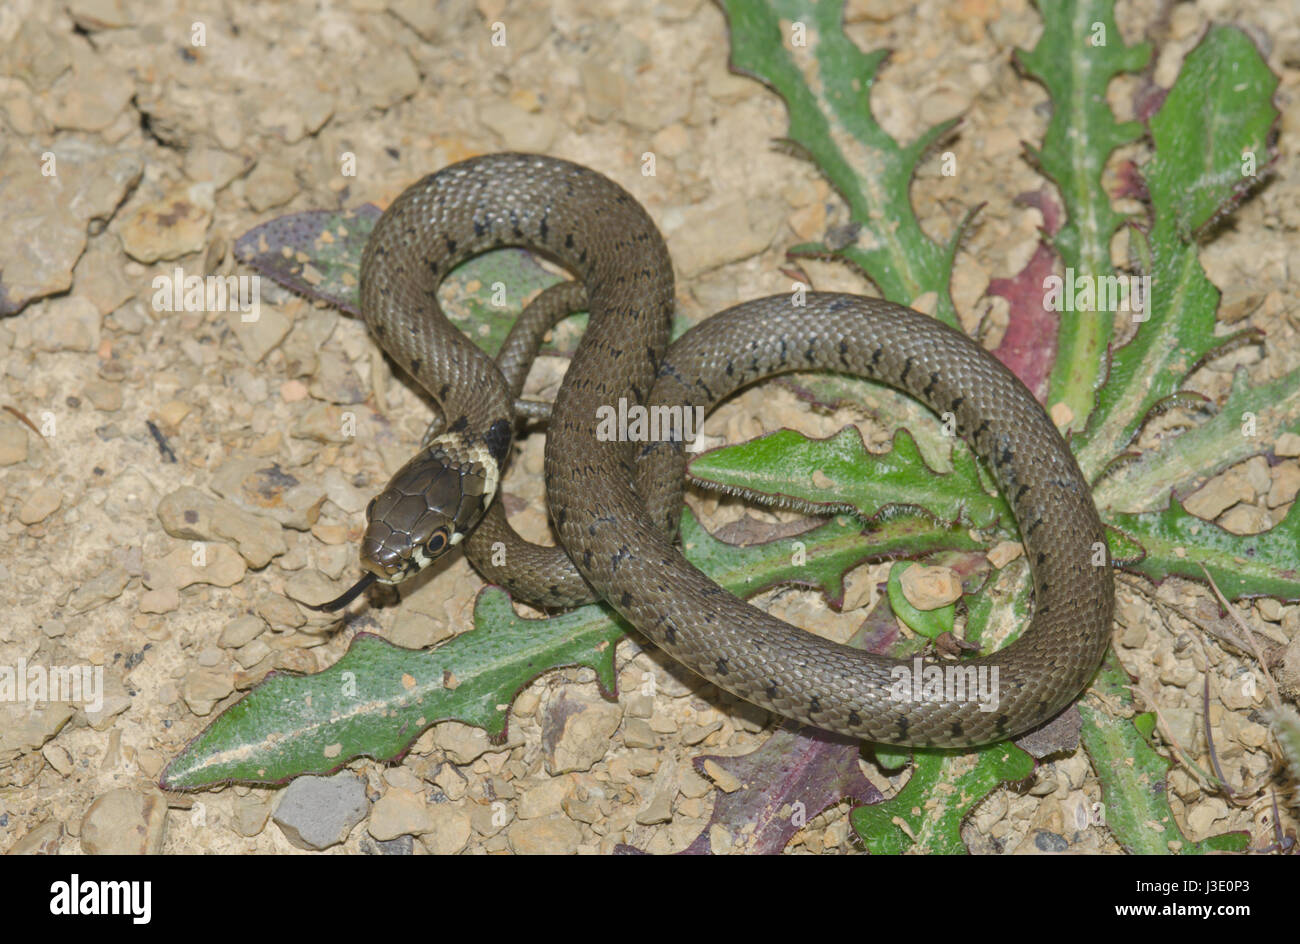 Juvenile Barred Grass Snake (Natrix helvetica) 2 of 2 Stock Photo